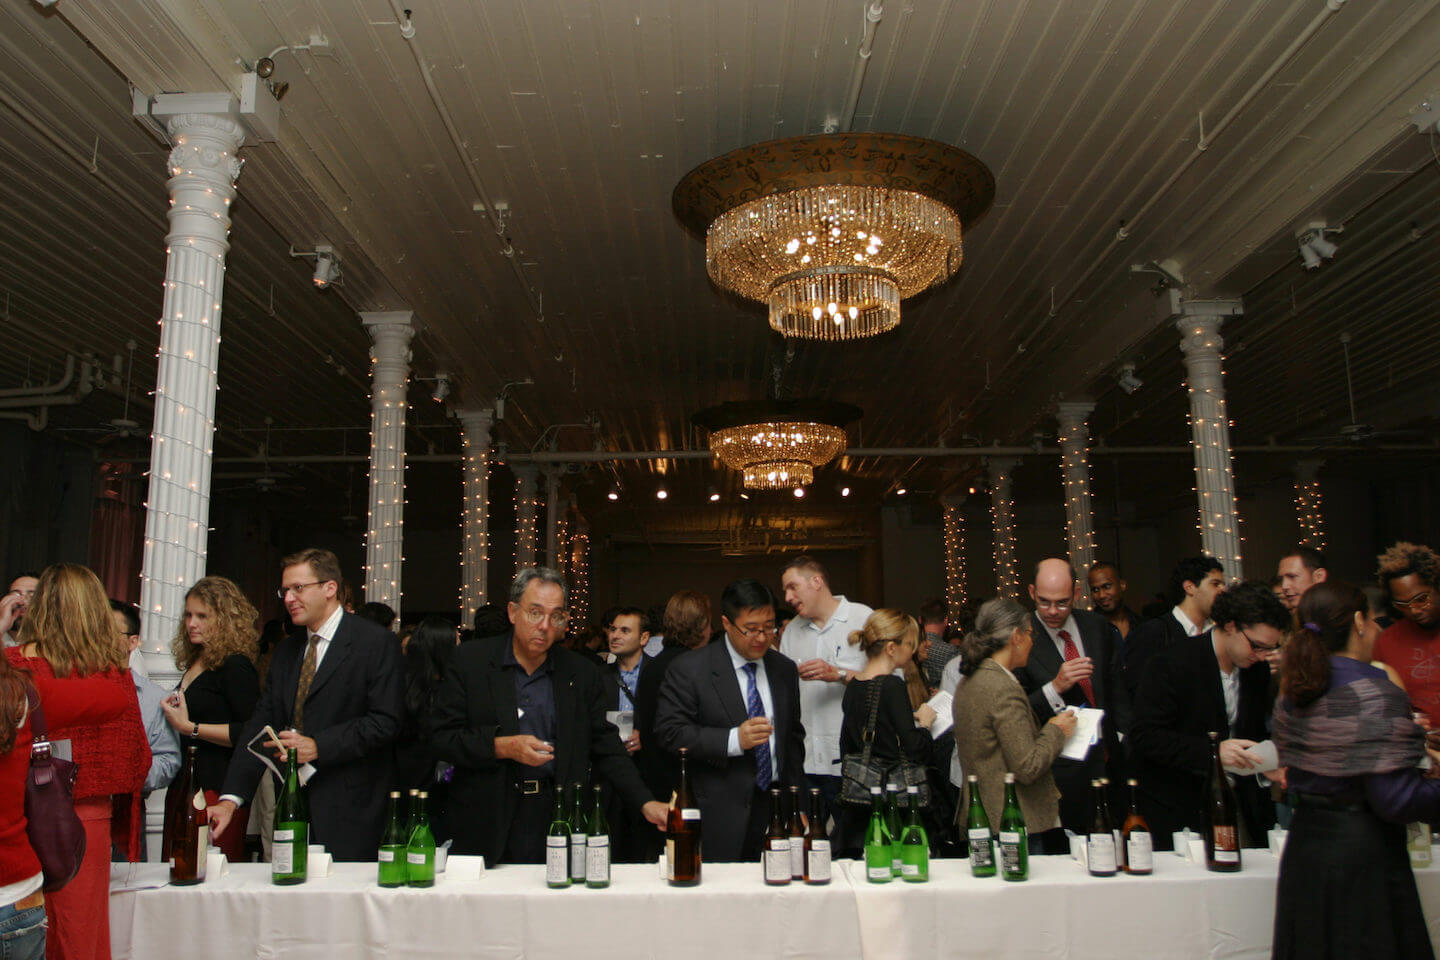 Crowd of people sampling sakes on the table in a dark room (2005 New York)